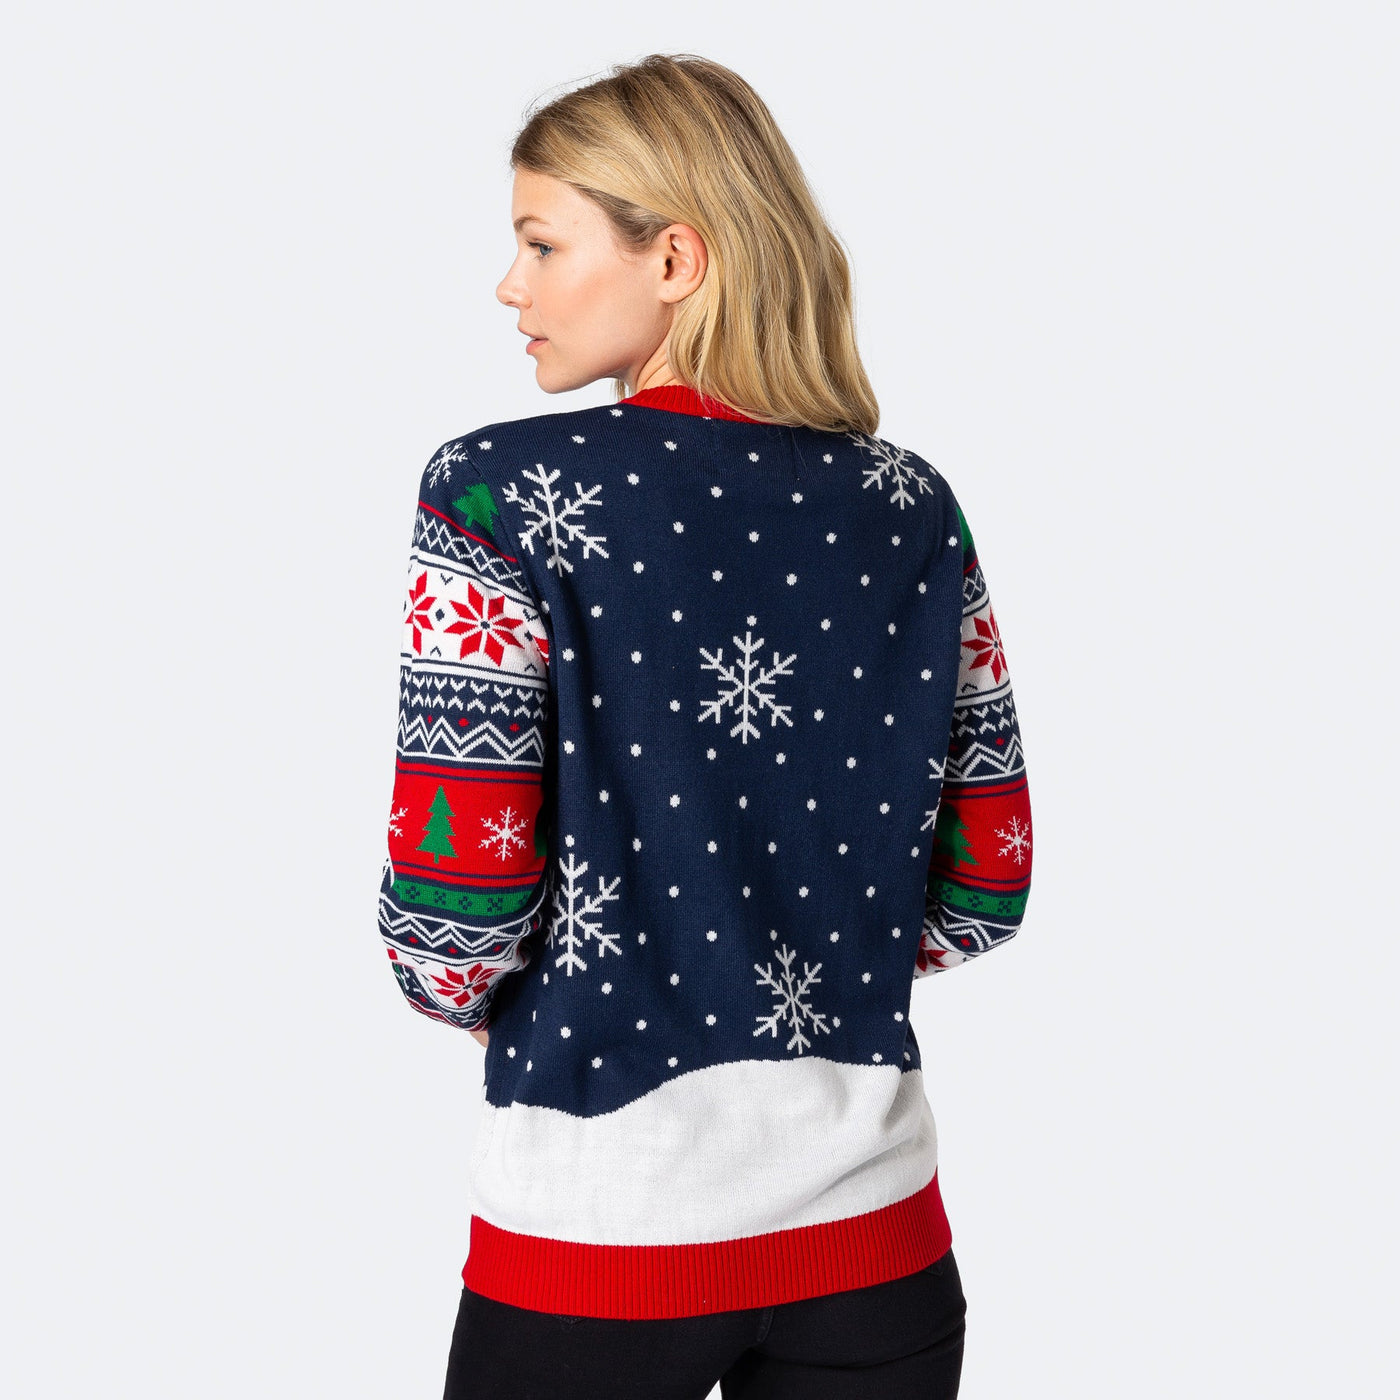 Women's Skiing Pinguin Christmas Sweater